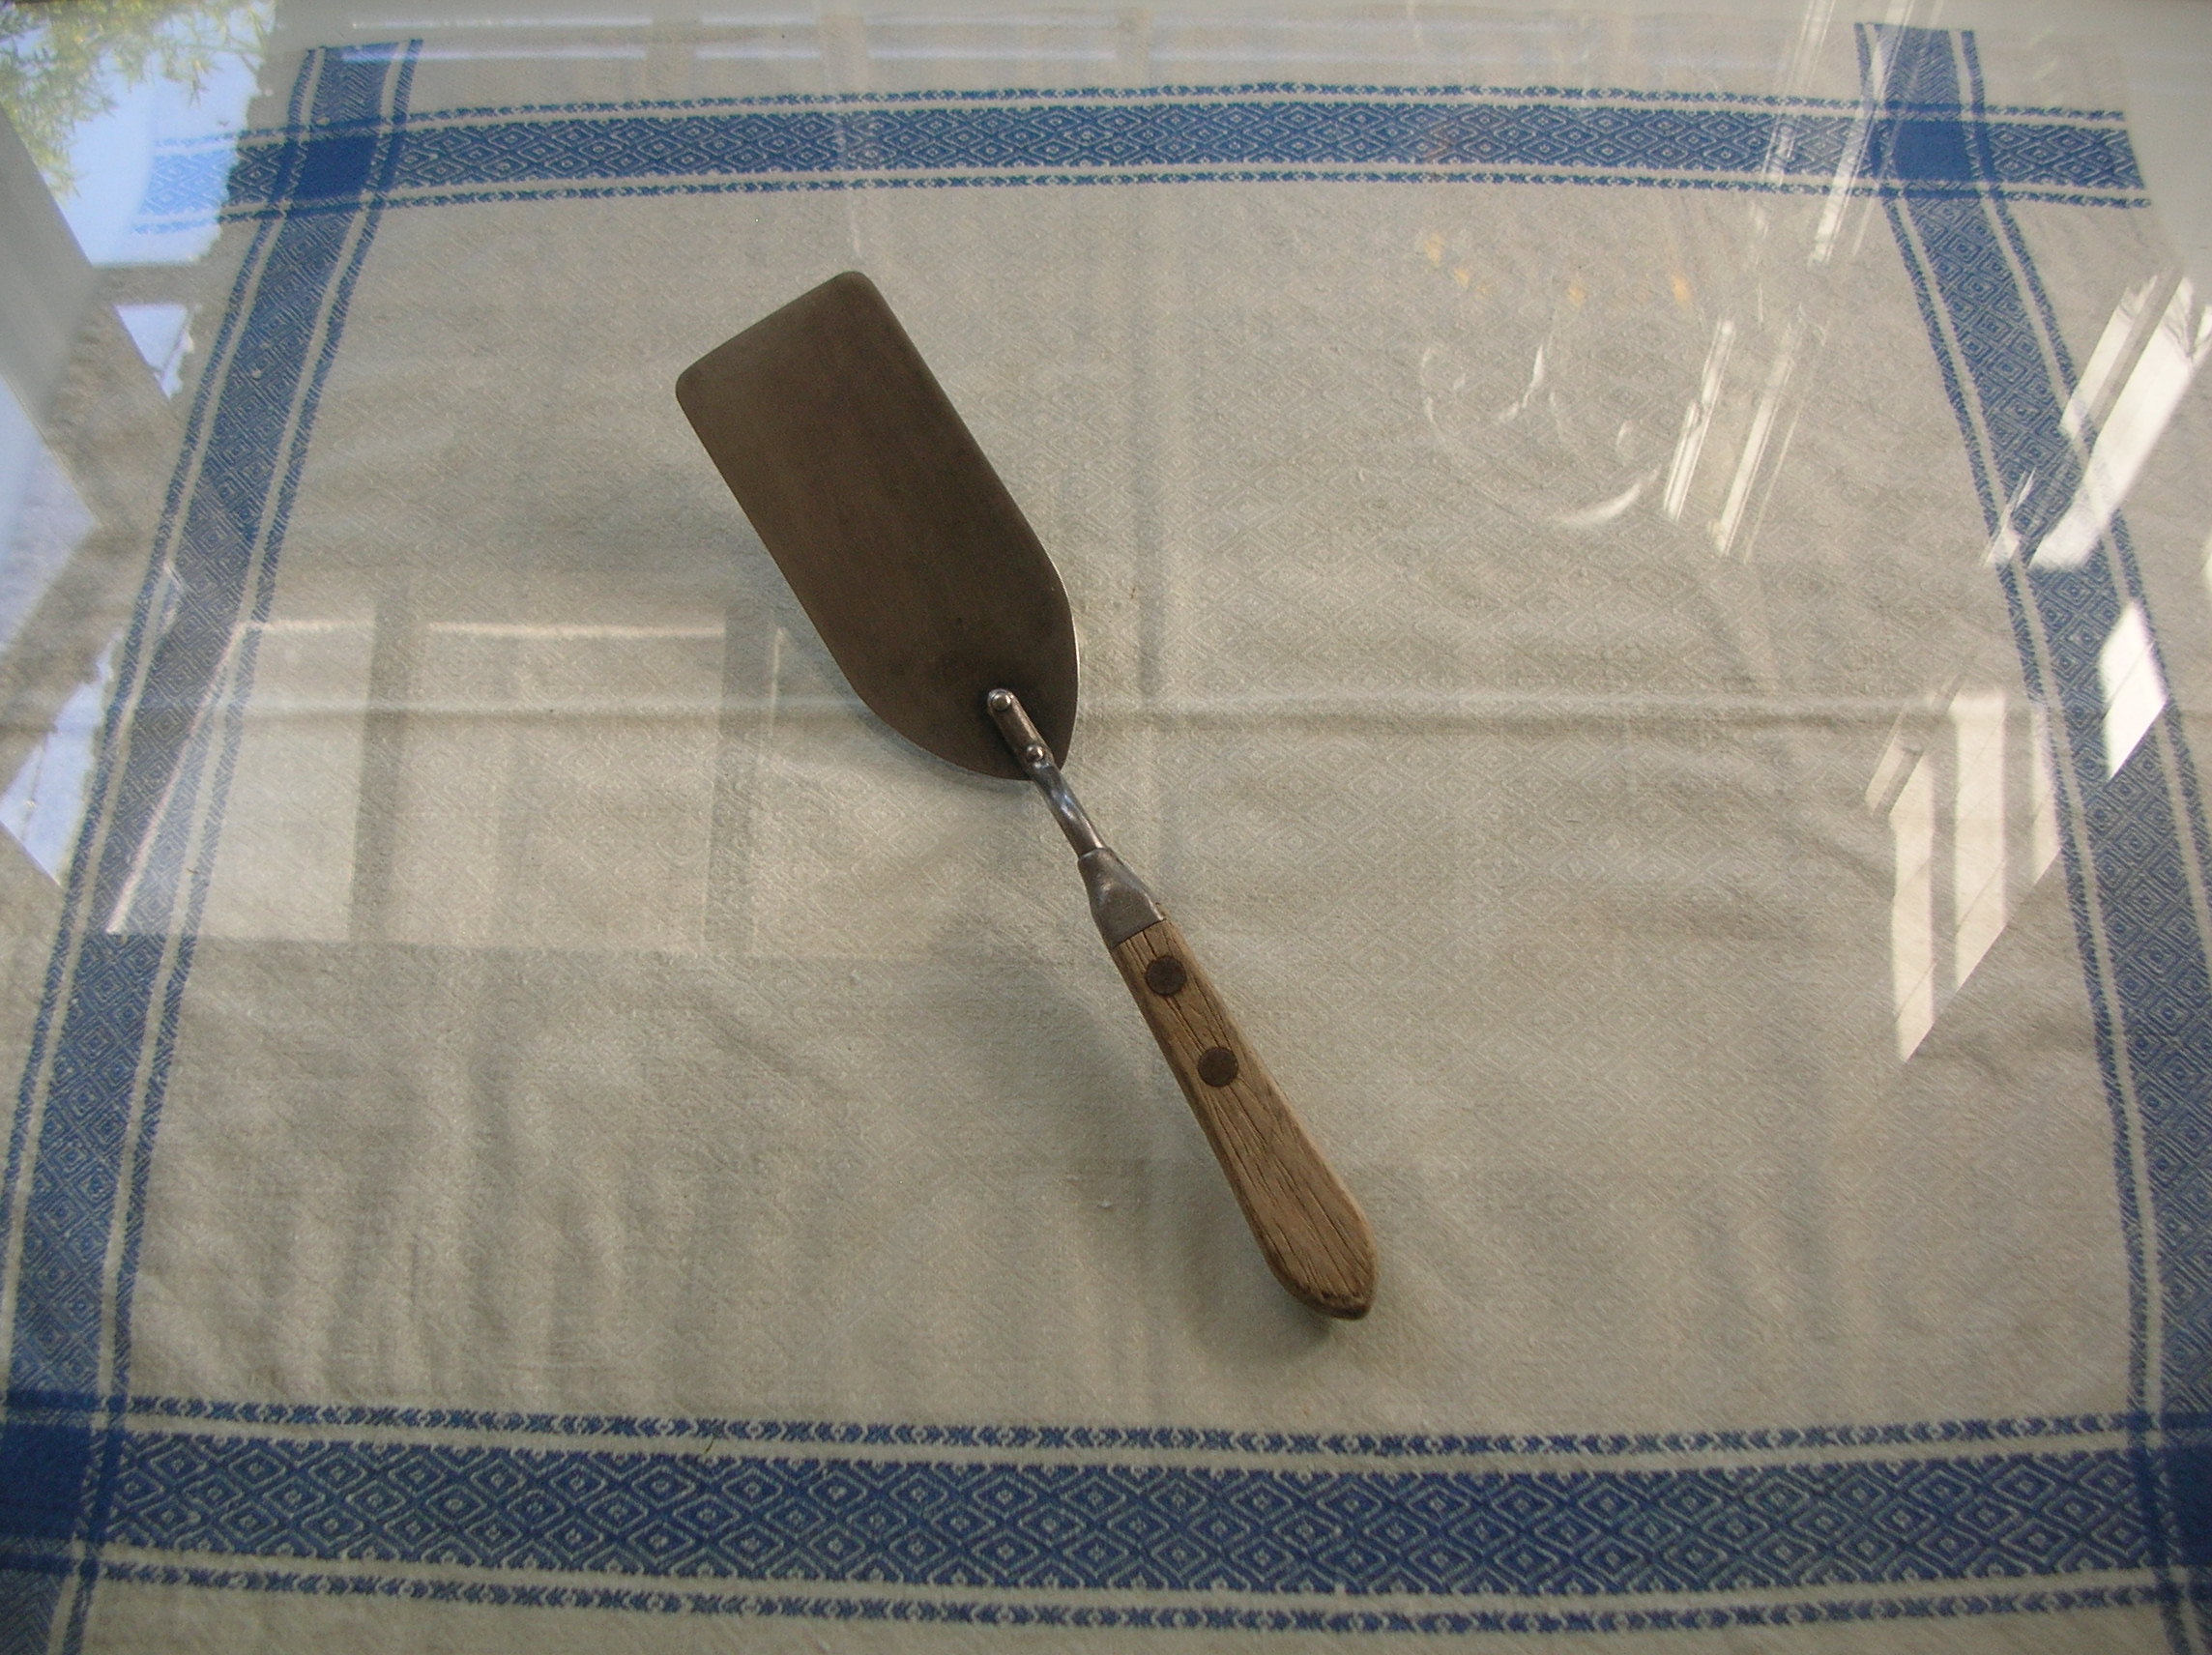 The inherited spatula